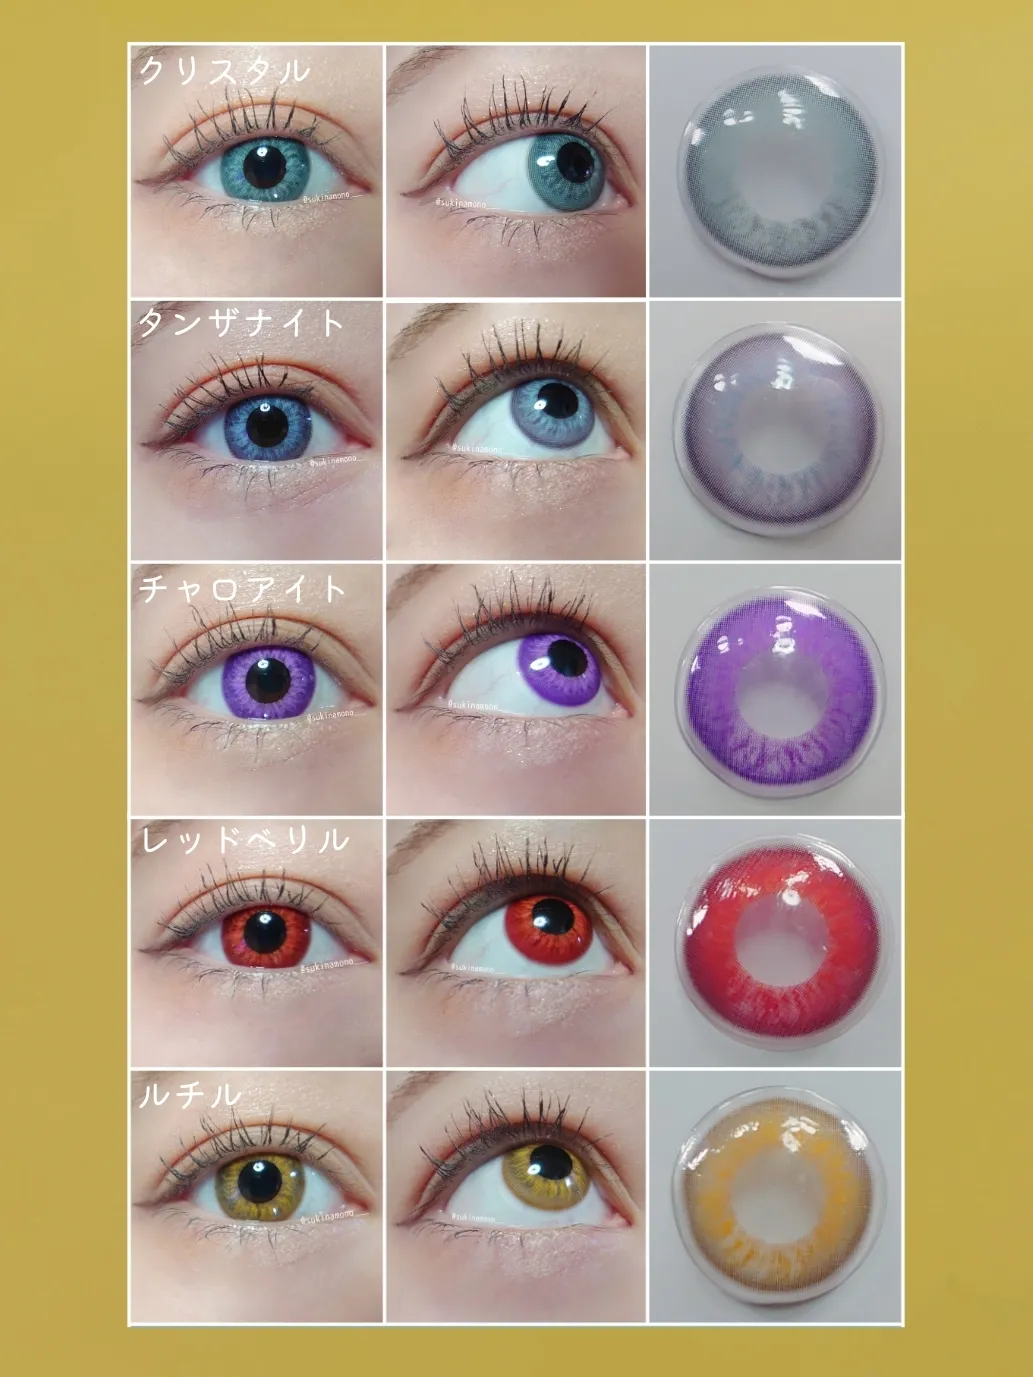 Mavis Dracula Cosplay Contact Lenses - Colored Contact Lenses